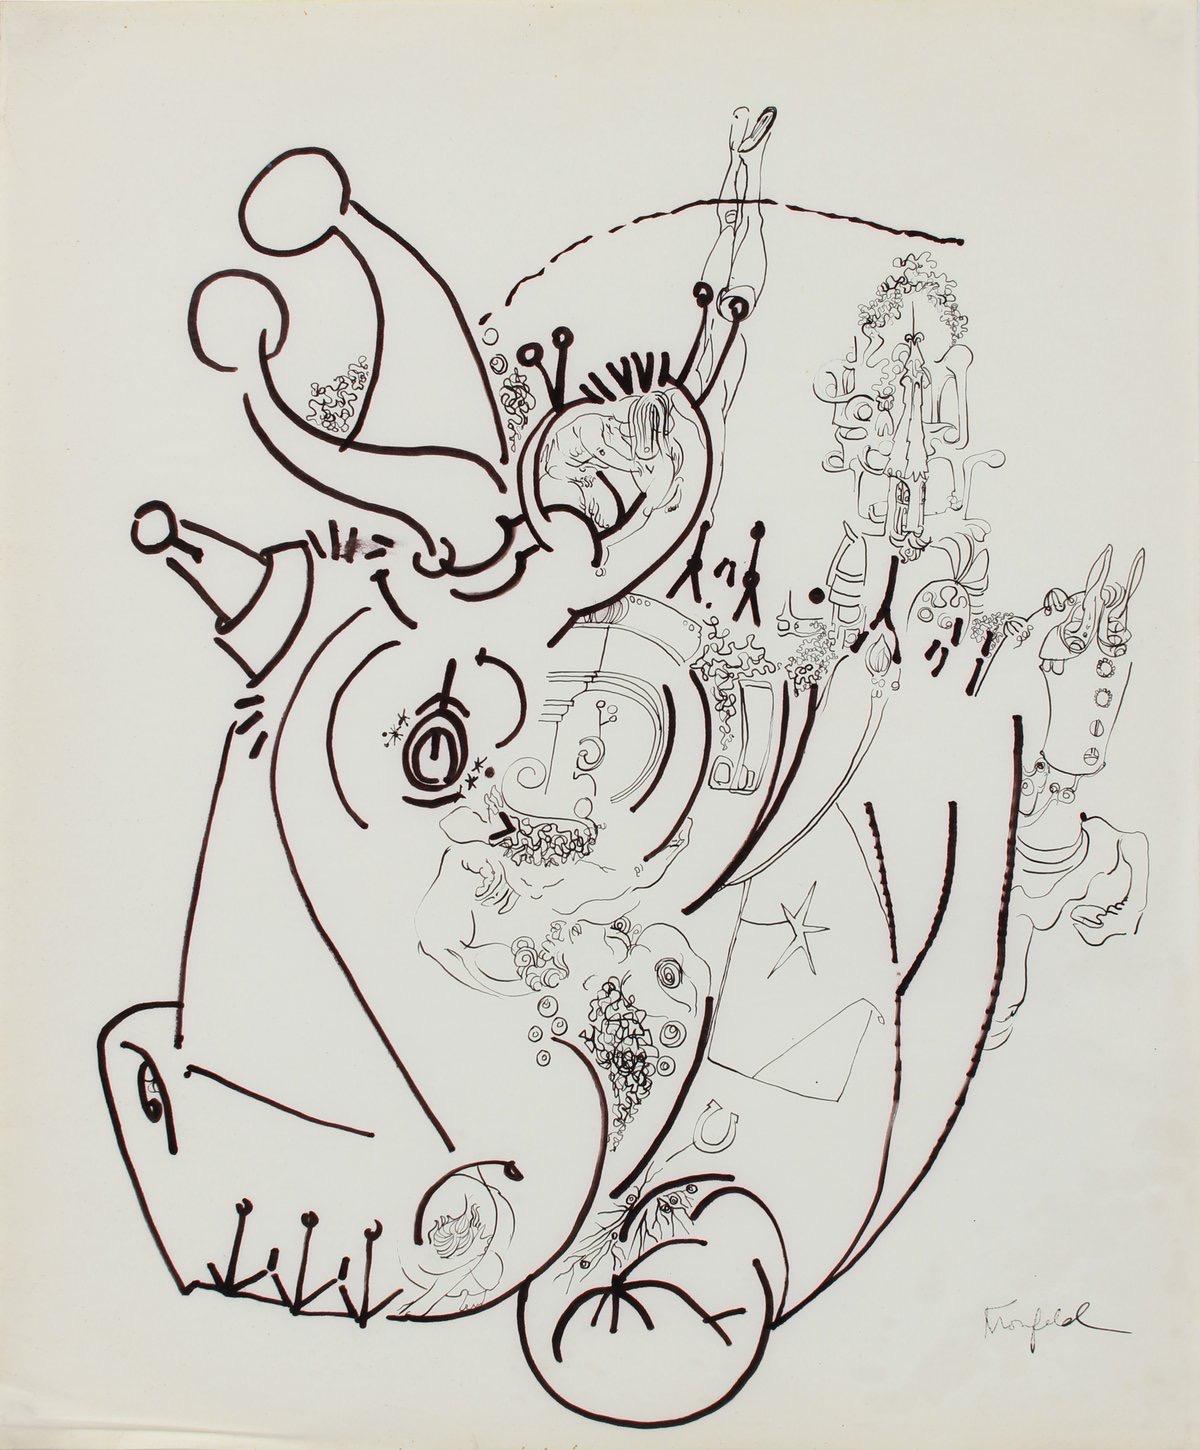 Morris Kronfeld Animal Art - Surreal Rhinoceros Drawing 1960-80s Ink and Graphite